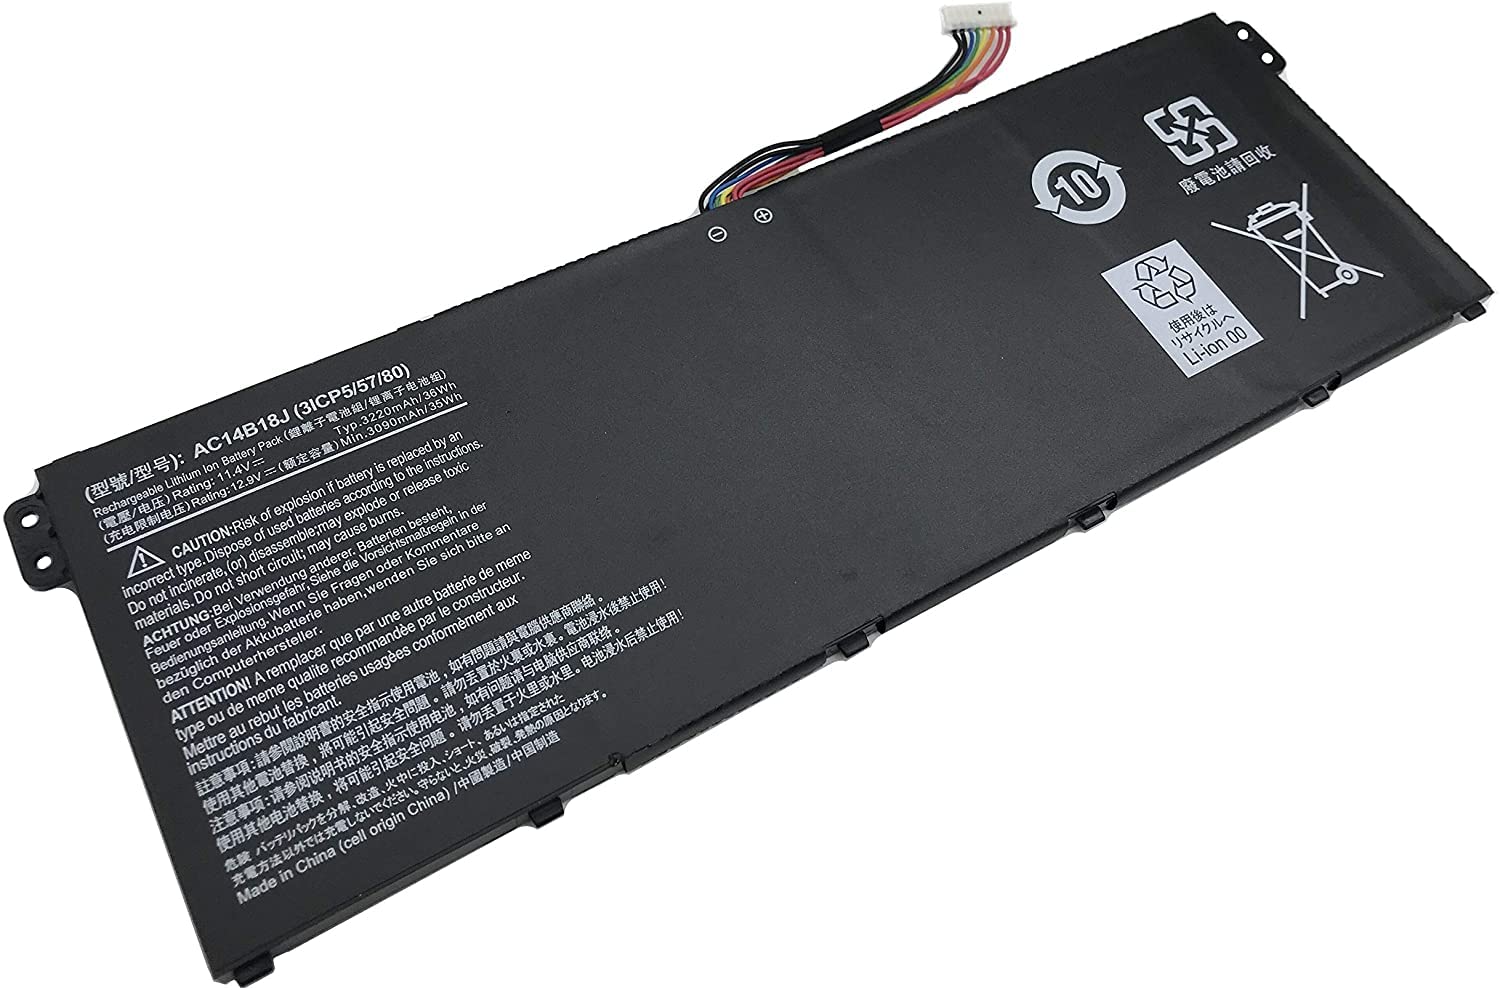 WISTAR AC14B18J Laptop Battery for Acer Aspire V3-111 V3-111P V5-122 V5-122P V5-132 V5-132P E3-111 E3-112 E3-112M ES1-511 ES1-512 Battery